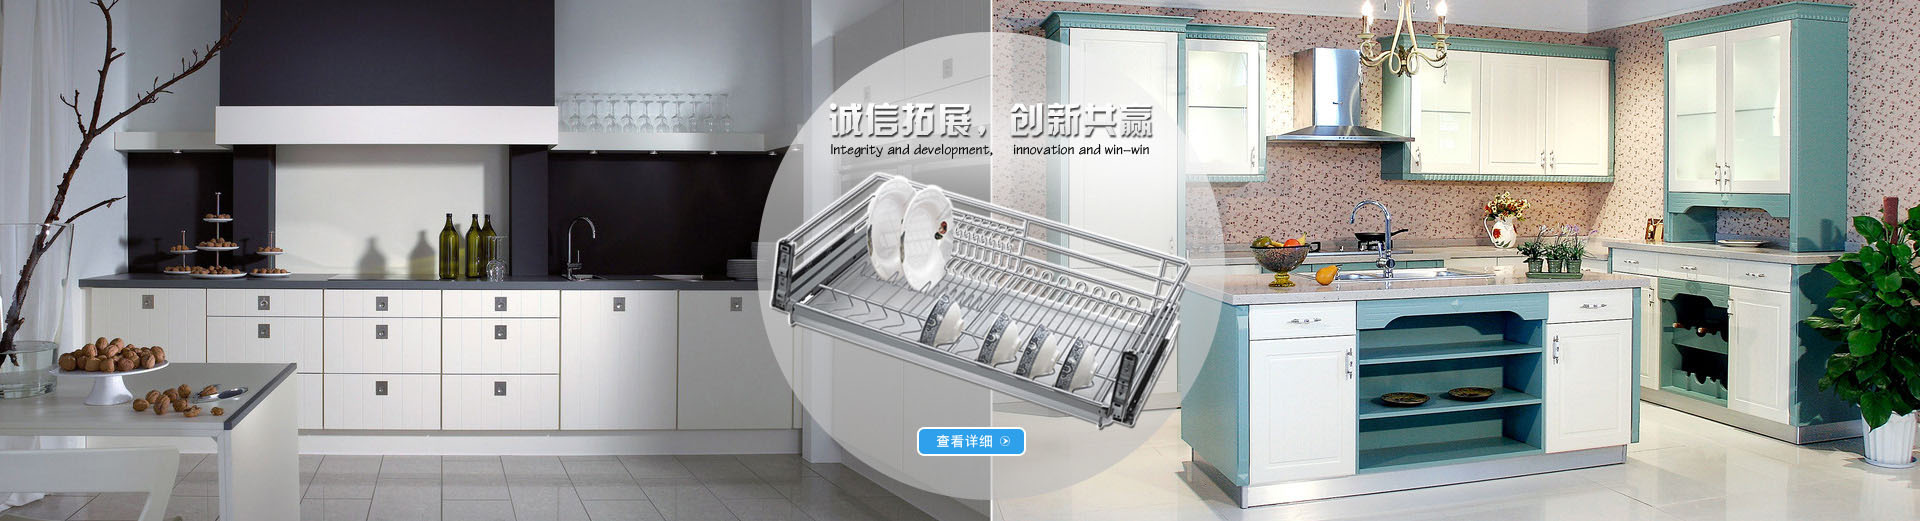 Dongguan ShengBoLan Hardware Products Co.Ltd